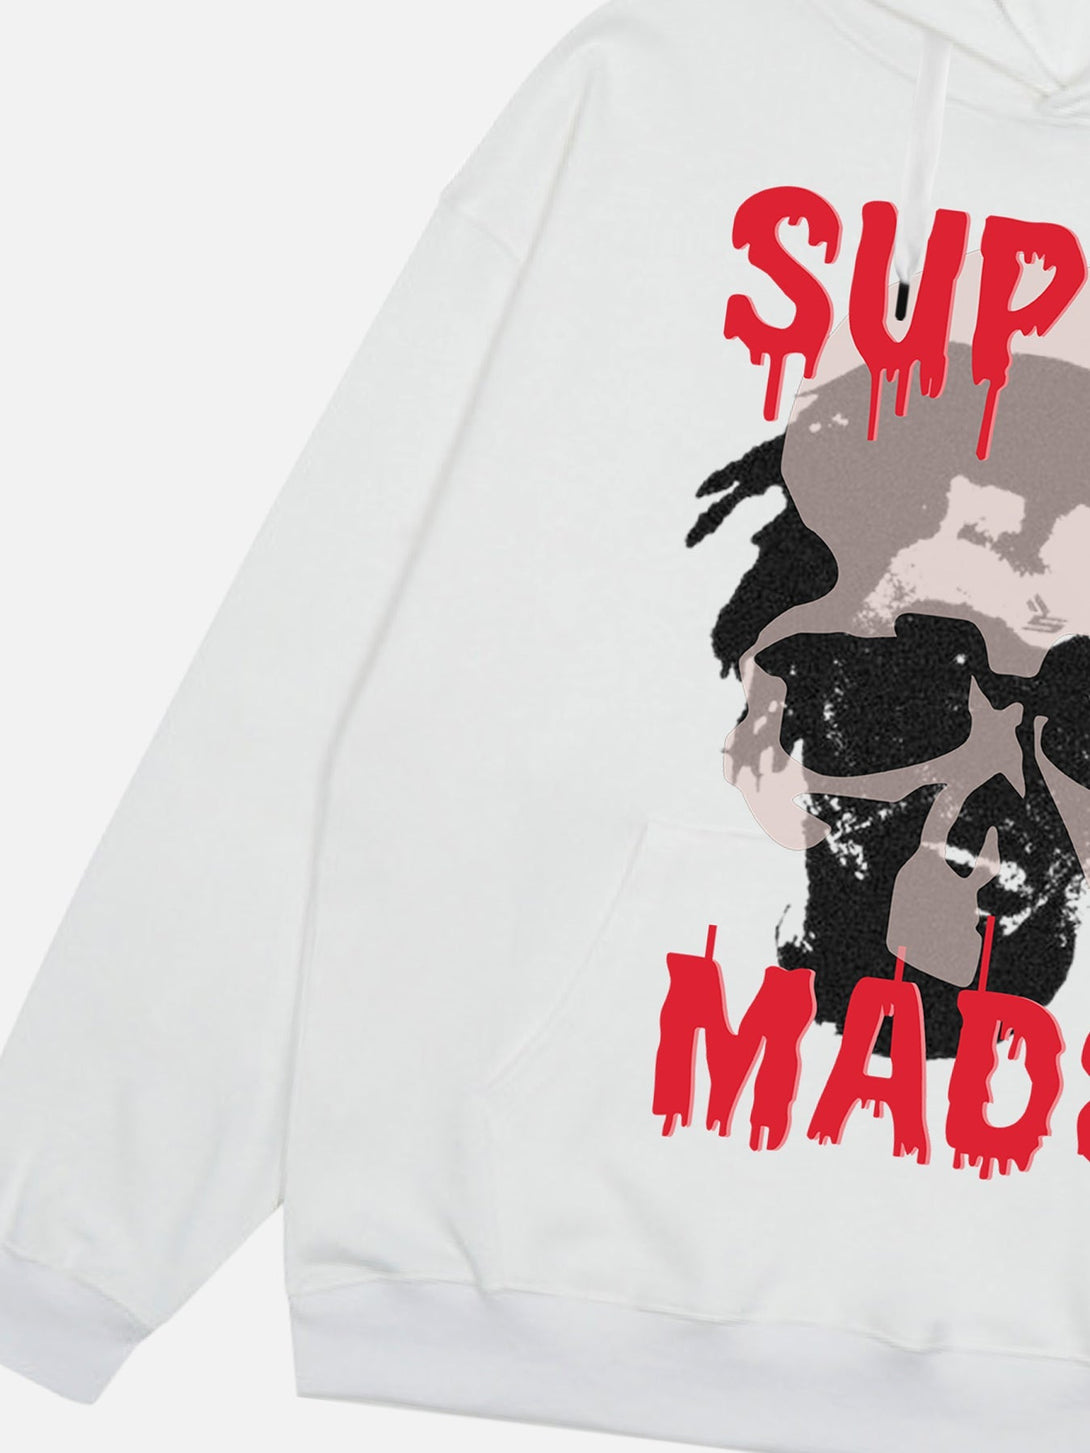 Majesda® - Trembling At The Skeleton Hoodie - 1814- Outfit Ideas - Streetwear Fashion - majesda.com